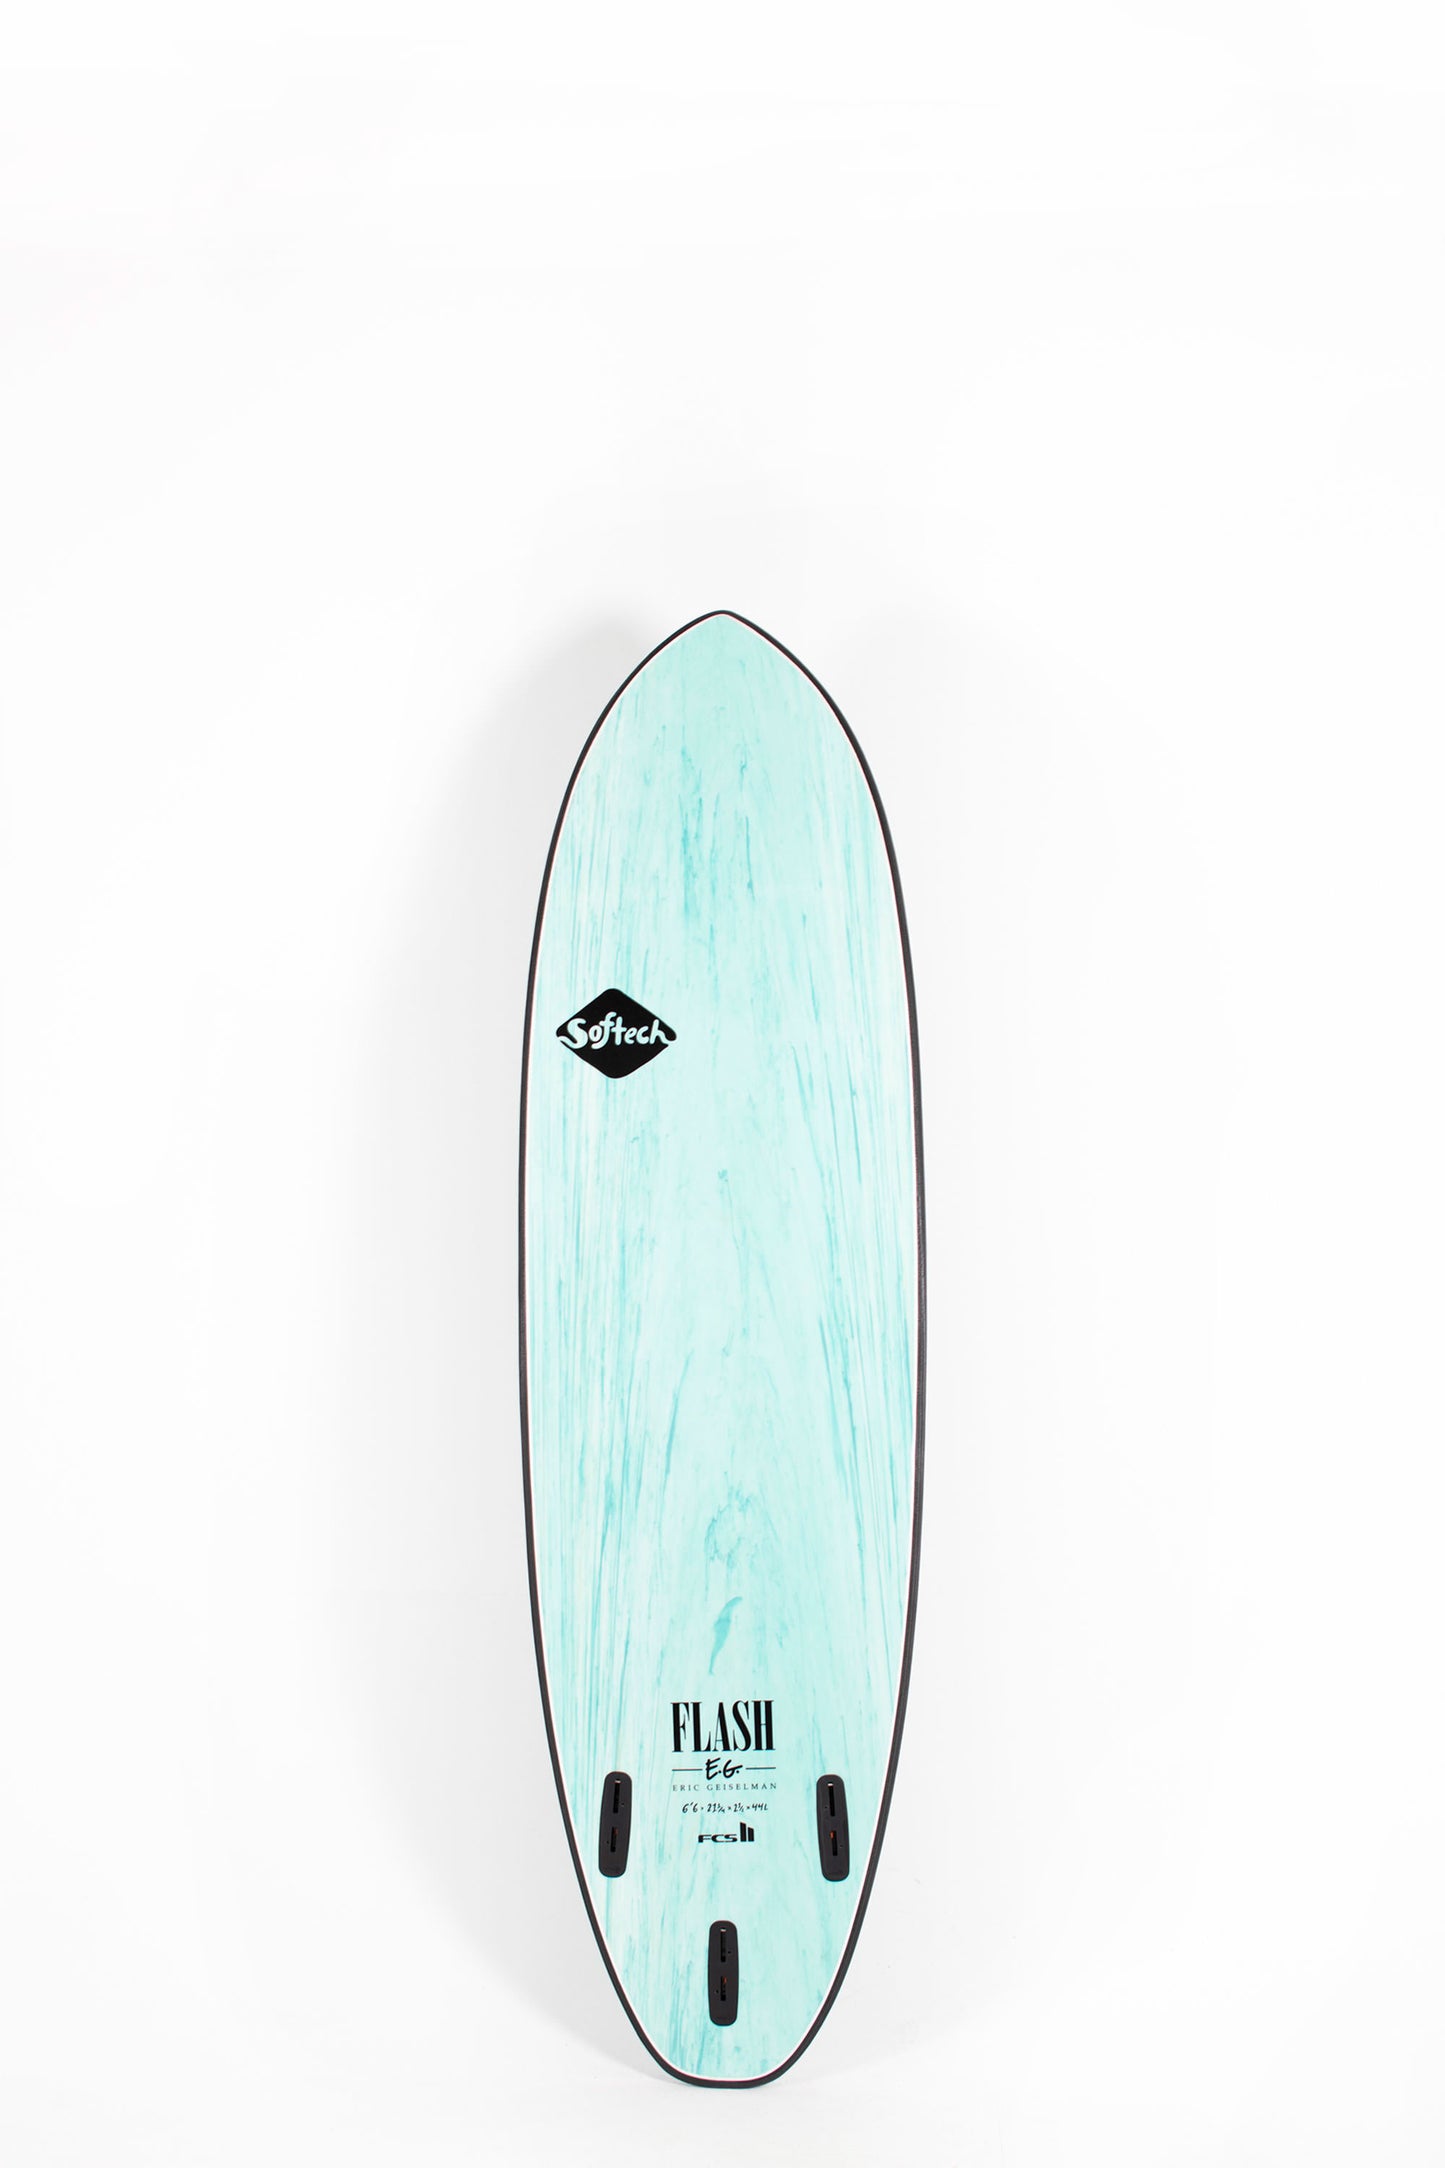 Pukas Surf Shop - SOFTECH - FLASH ERIC GEISELMAN 6'6"